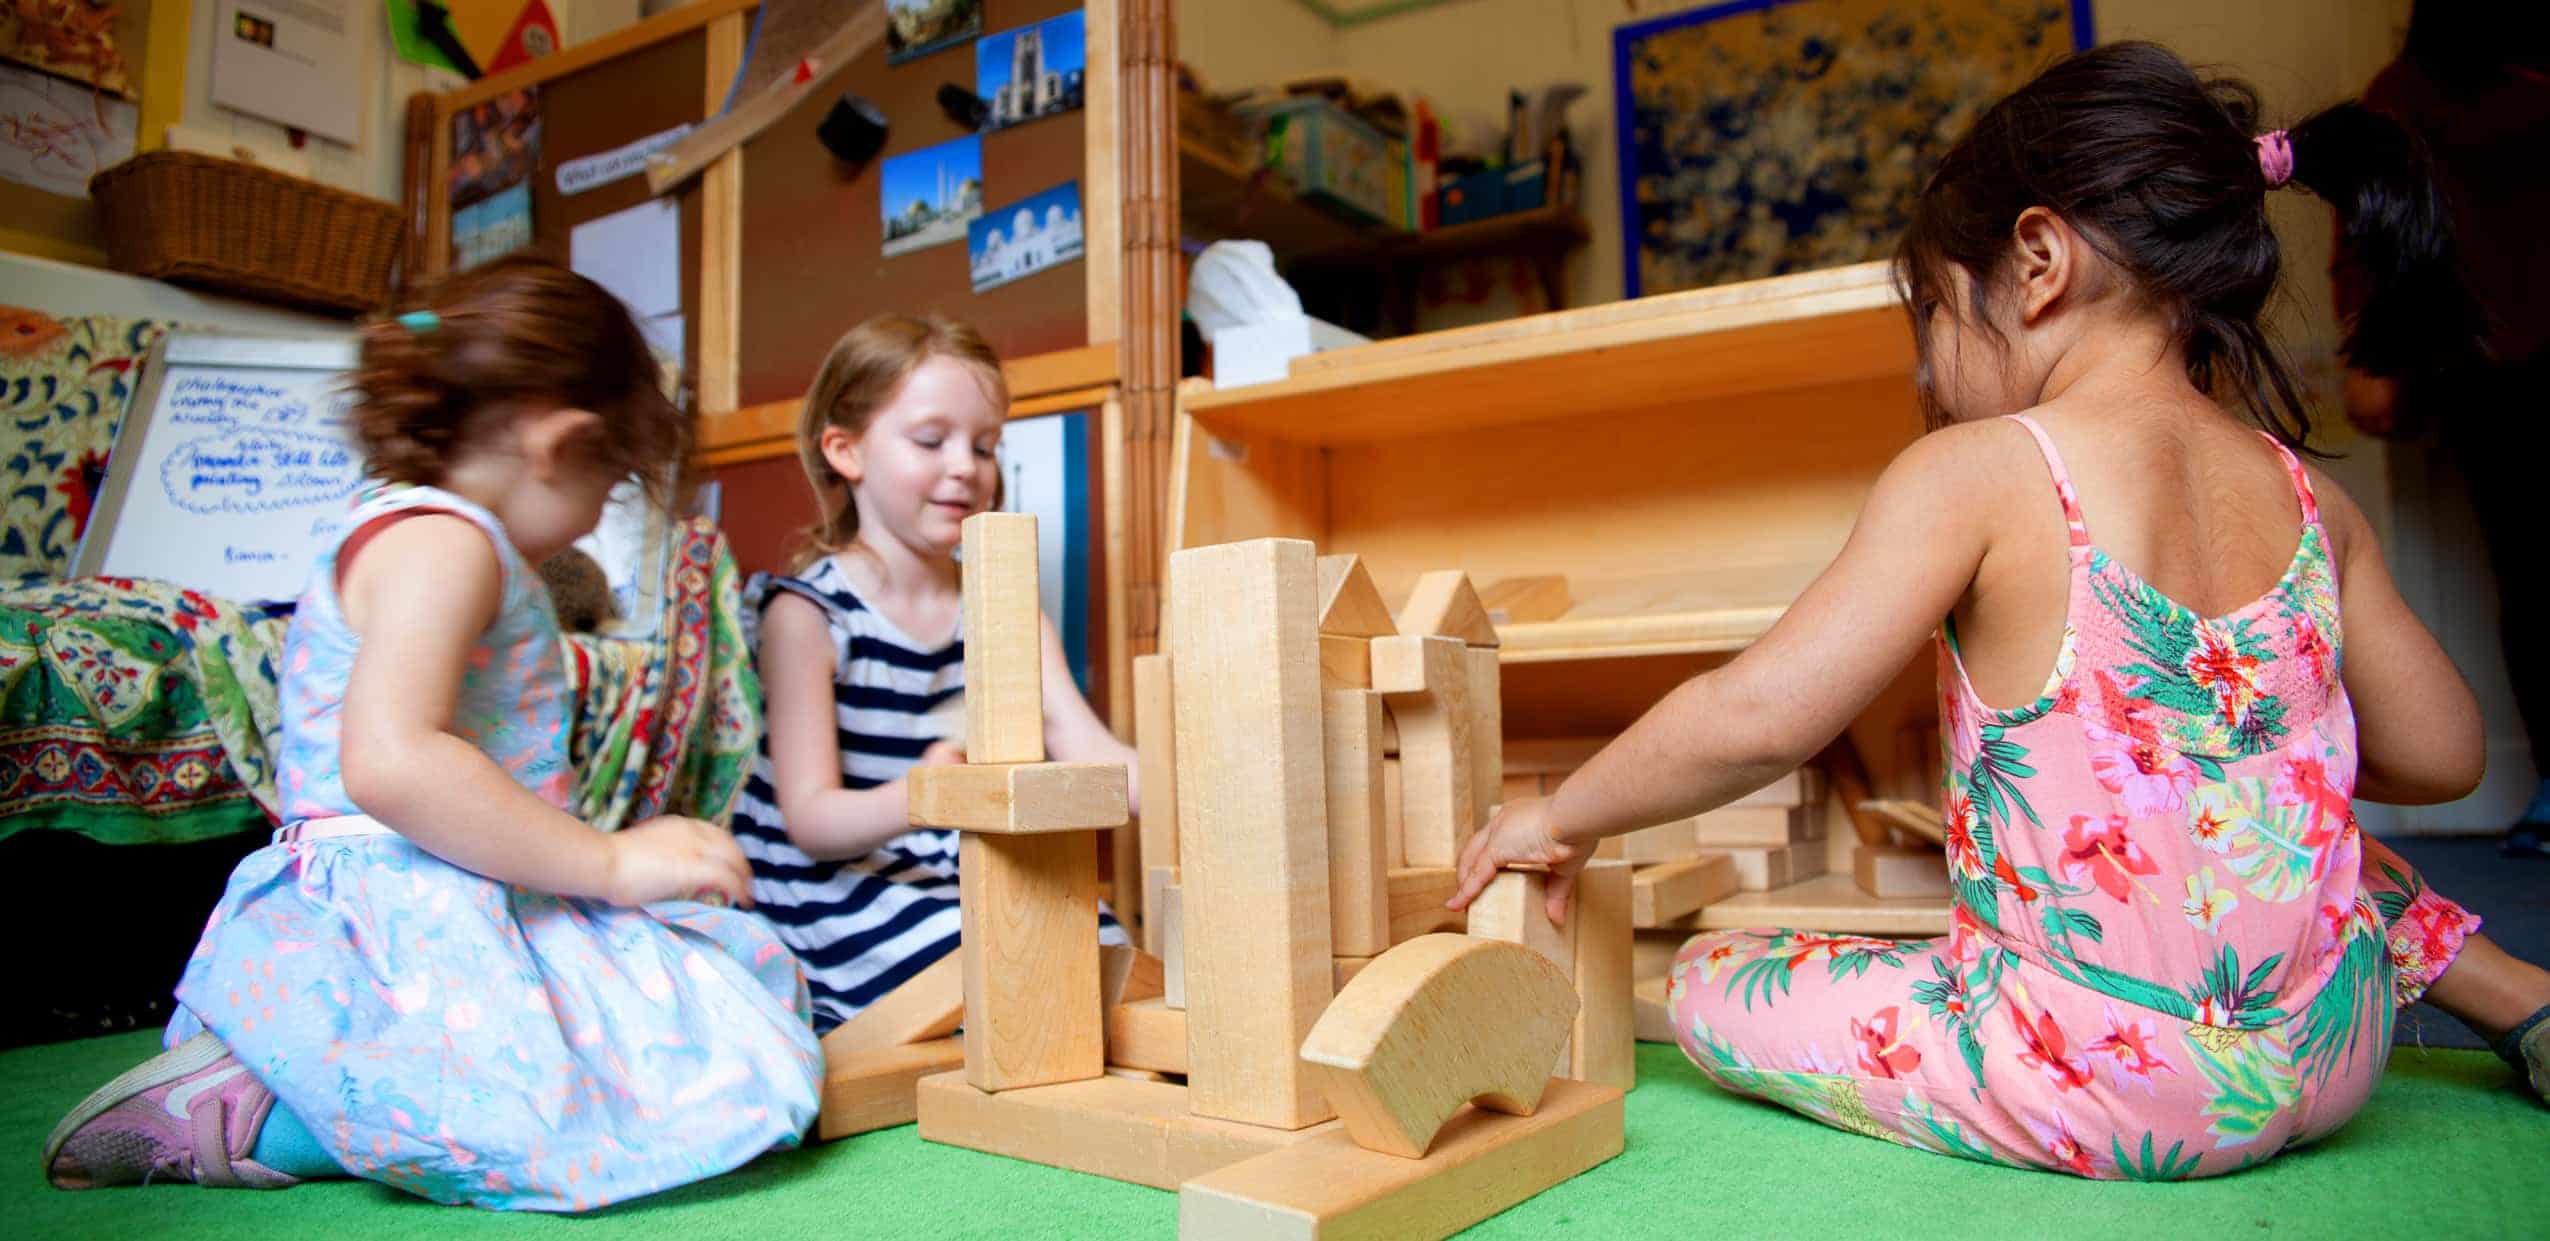 Three children play with wooden building blocks